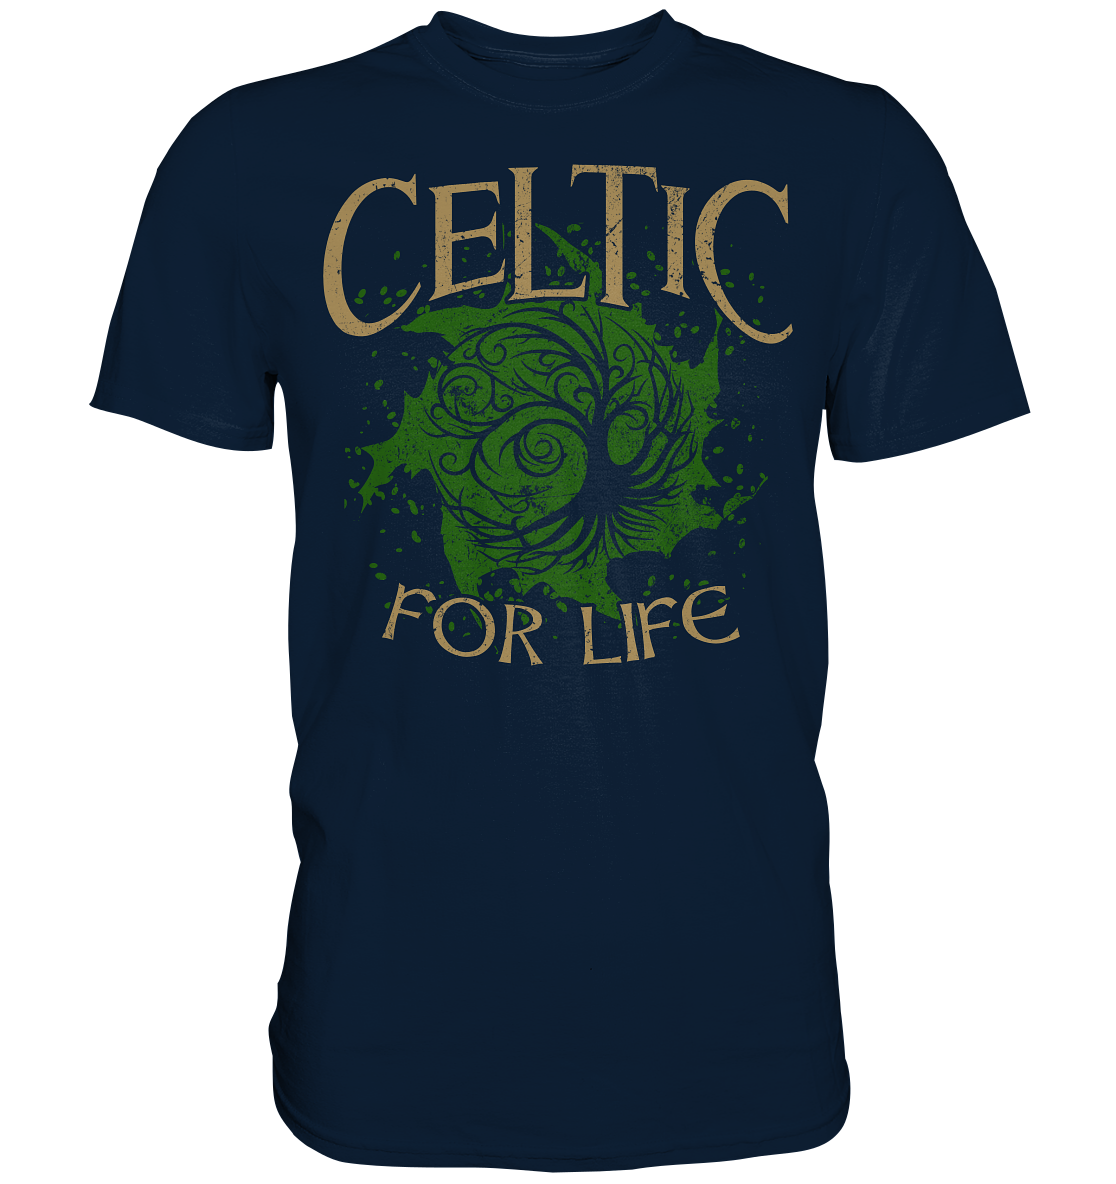 Celtic "For Life" - Premium Shirt